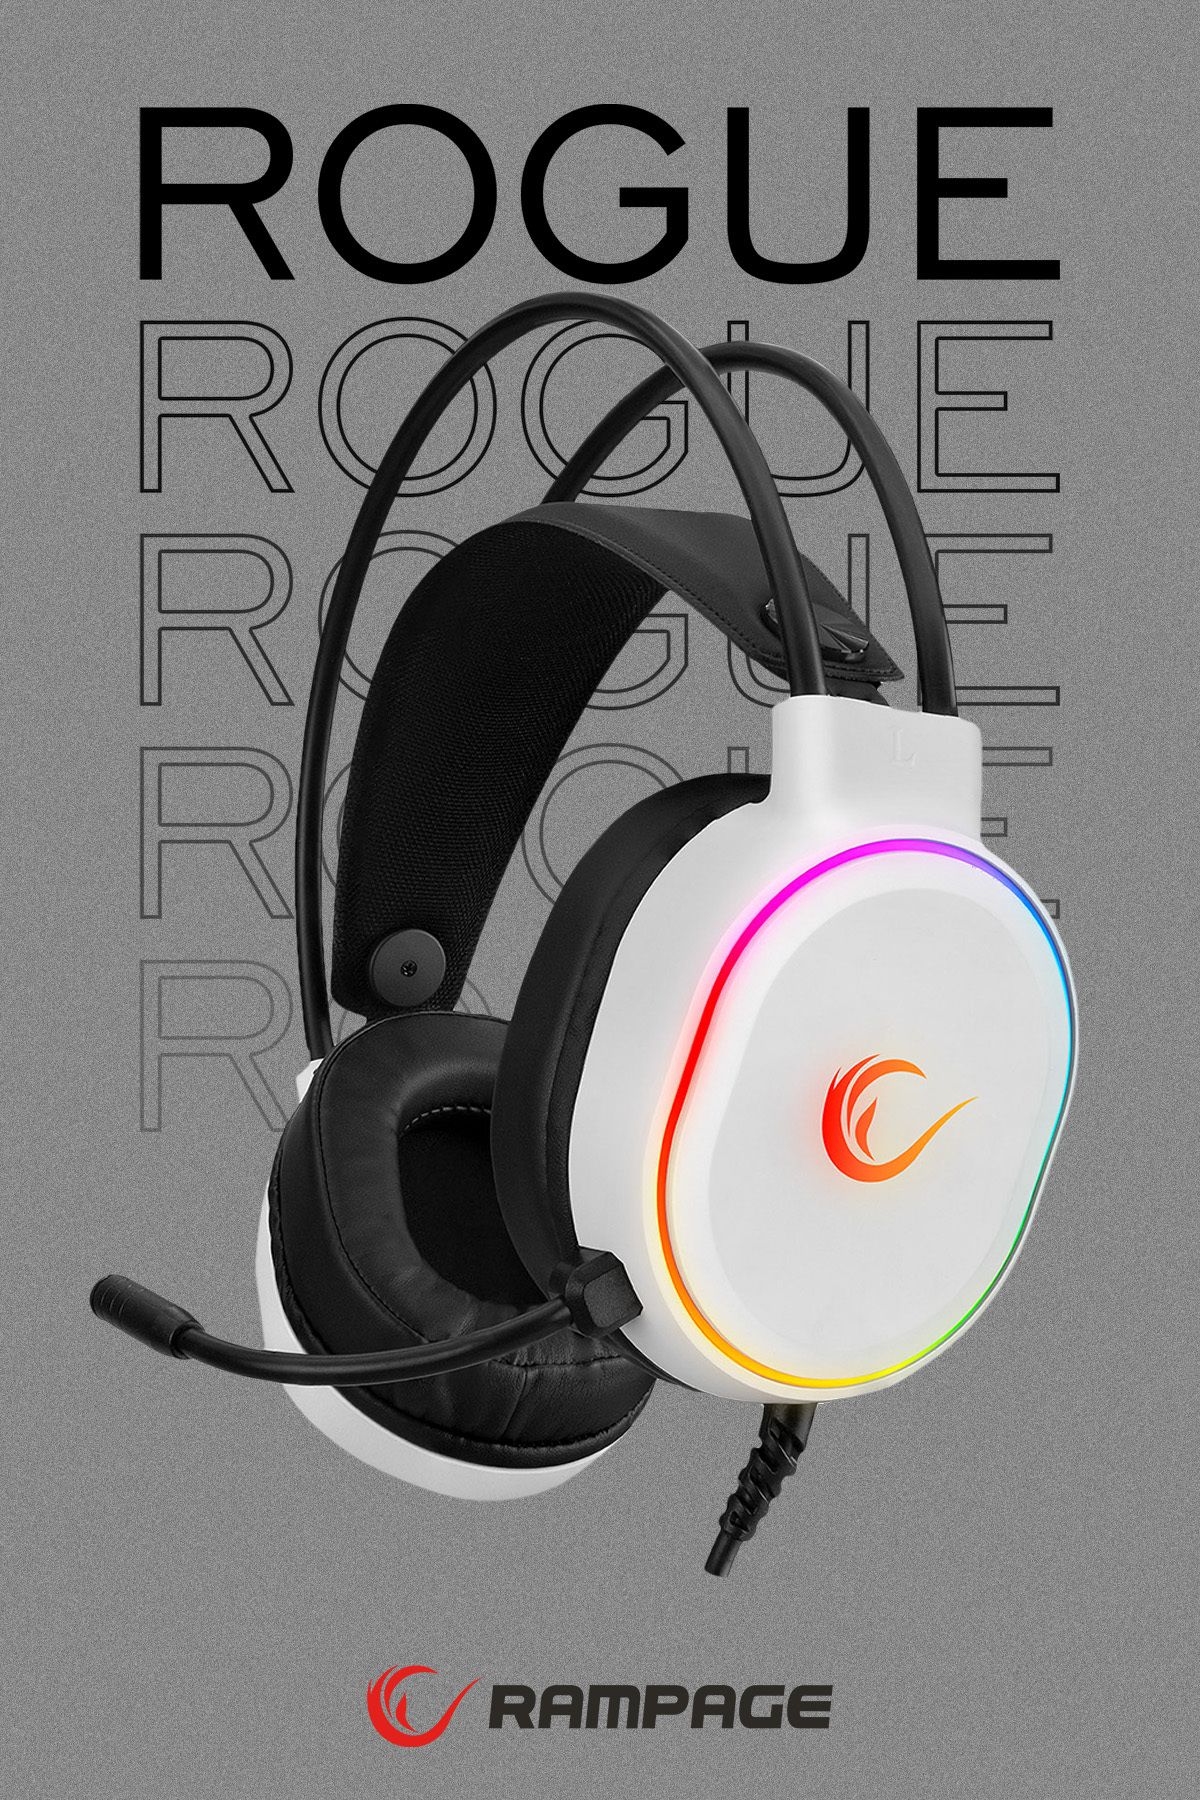 Rampage Rogue Beyaz Usb 7.1 Surround Rgb Ledli Gaming Oyuncu Mikrofonlu Kulaklık